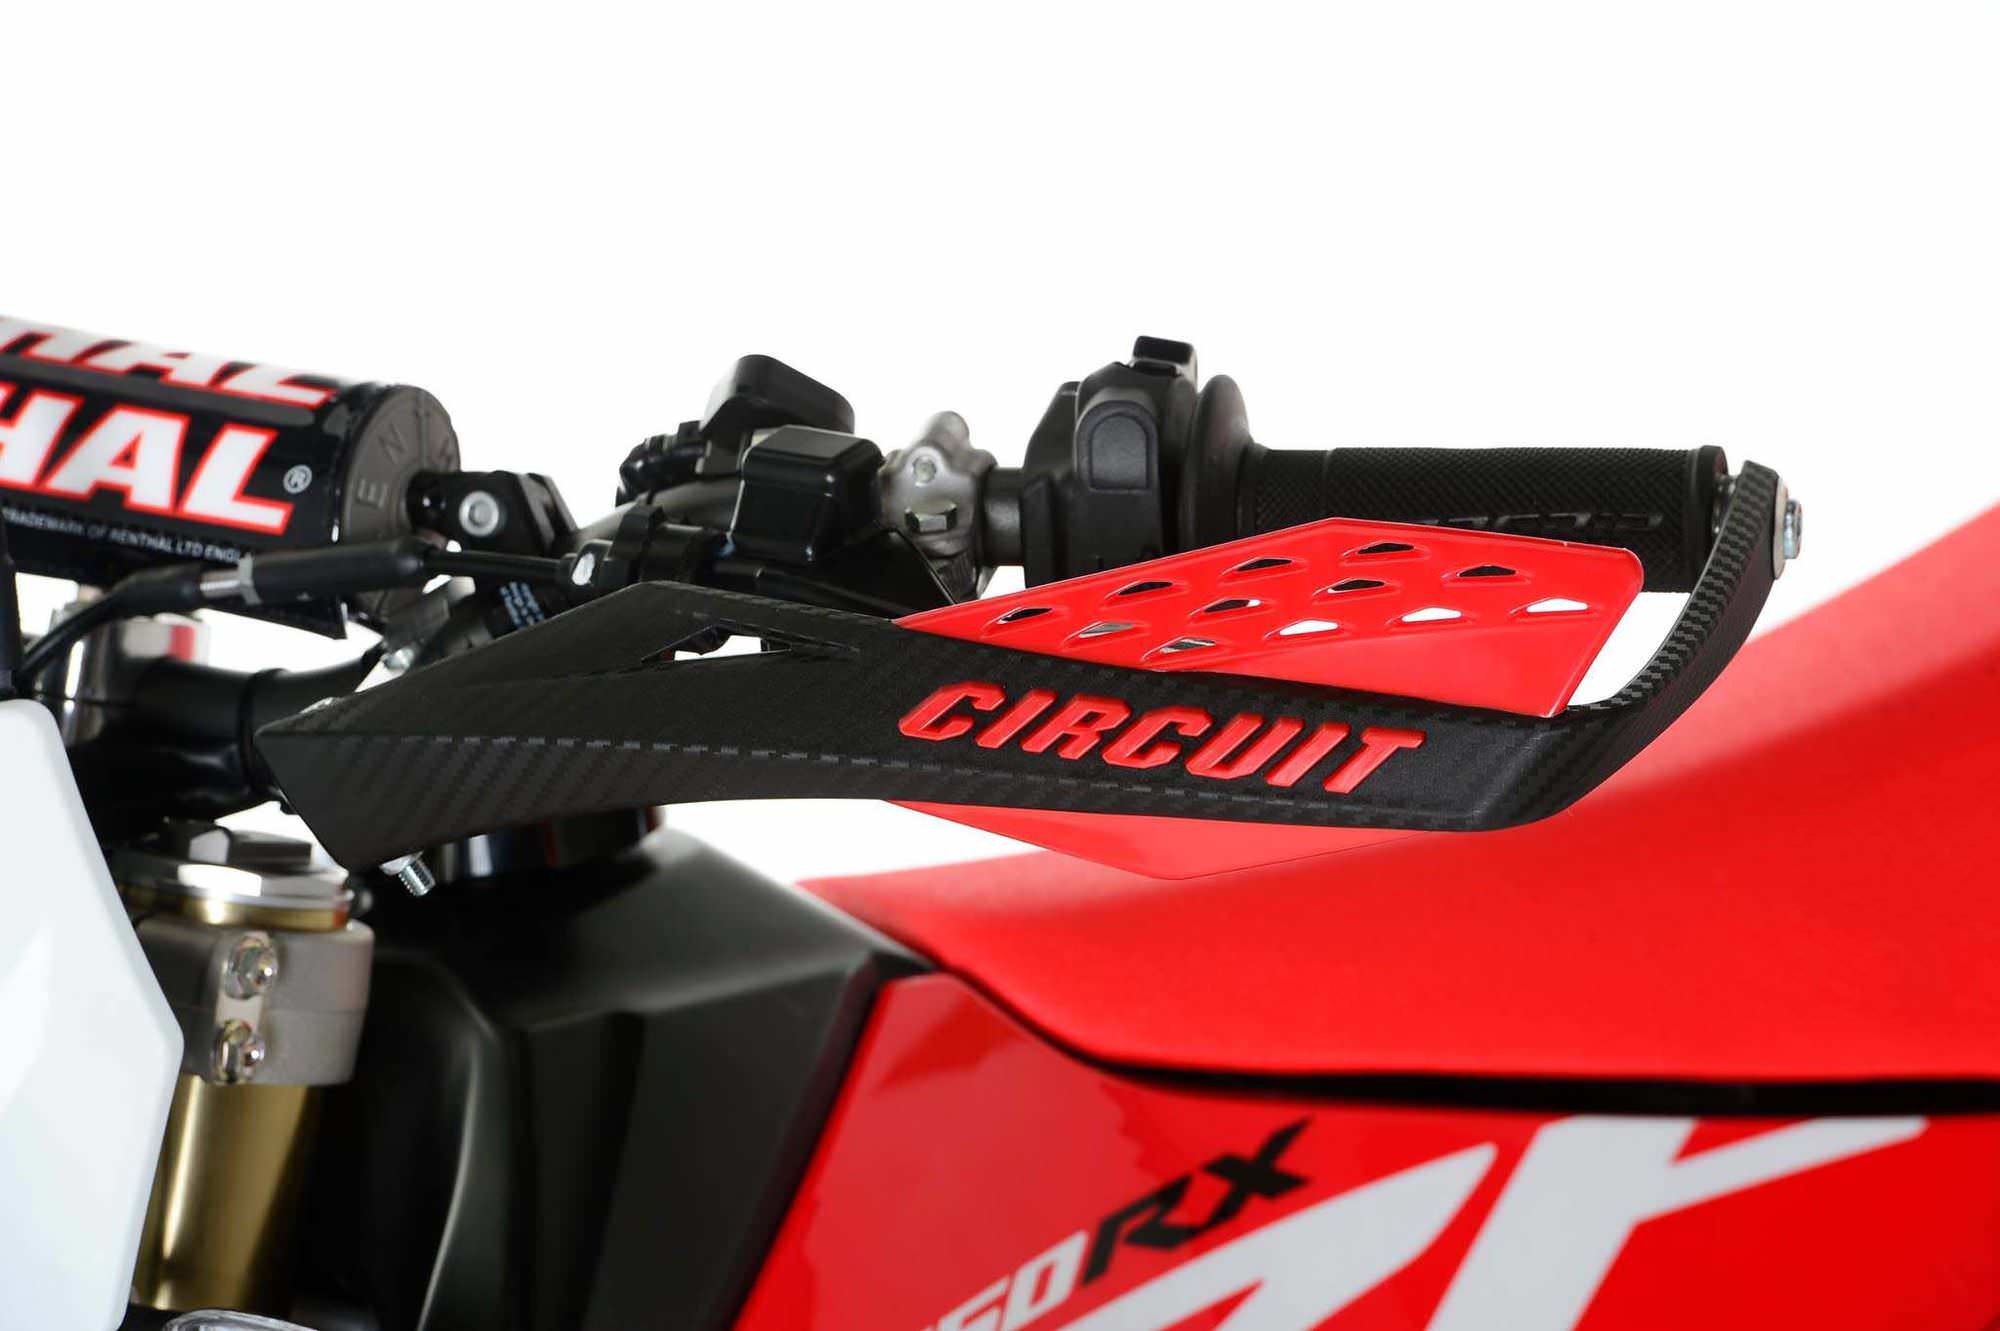 2017 Honda CRF450R SuperMoto Motard Bike / Motorcycle Review & Specs - CRF450R, CRF450X, CRF500R, CRF500X CRF Models